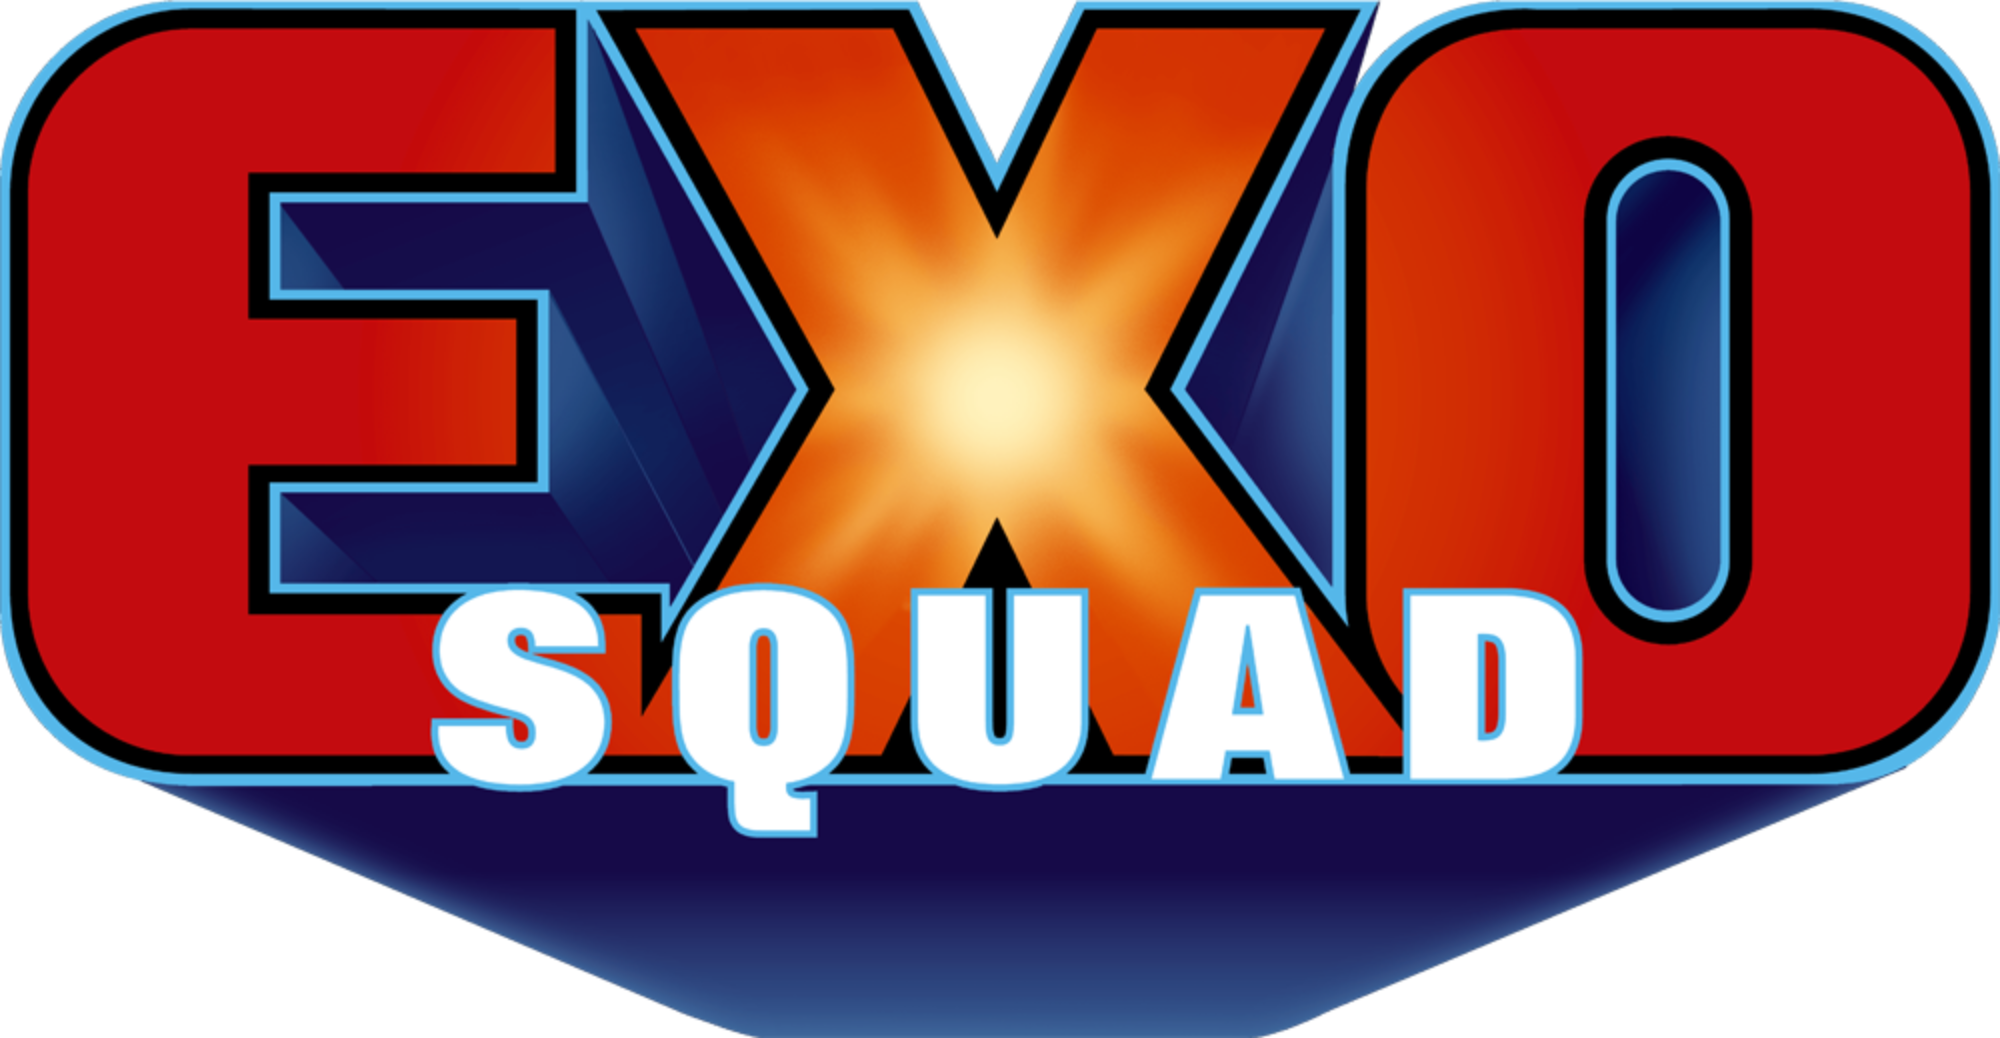 Exosquad (6 DVDs Box Set)